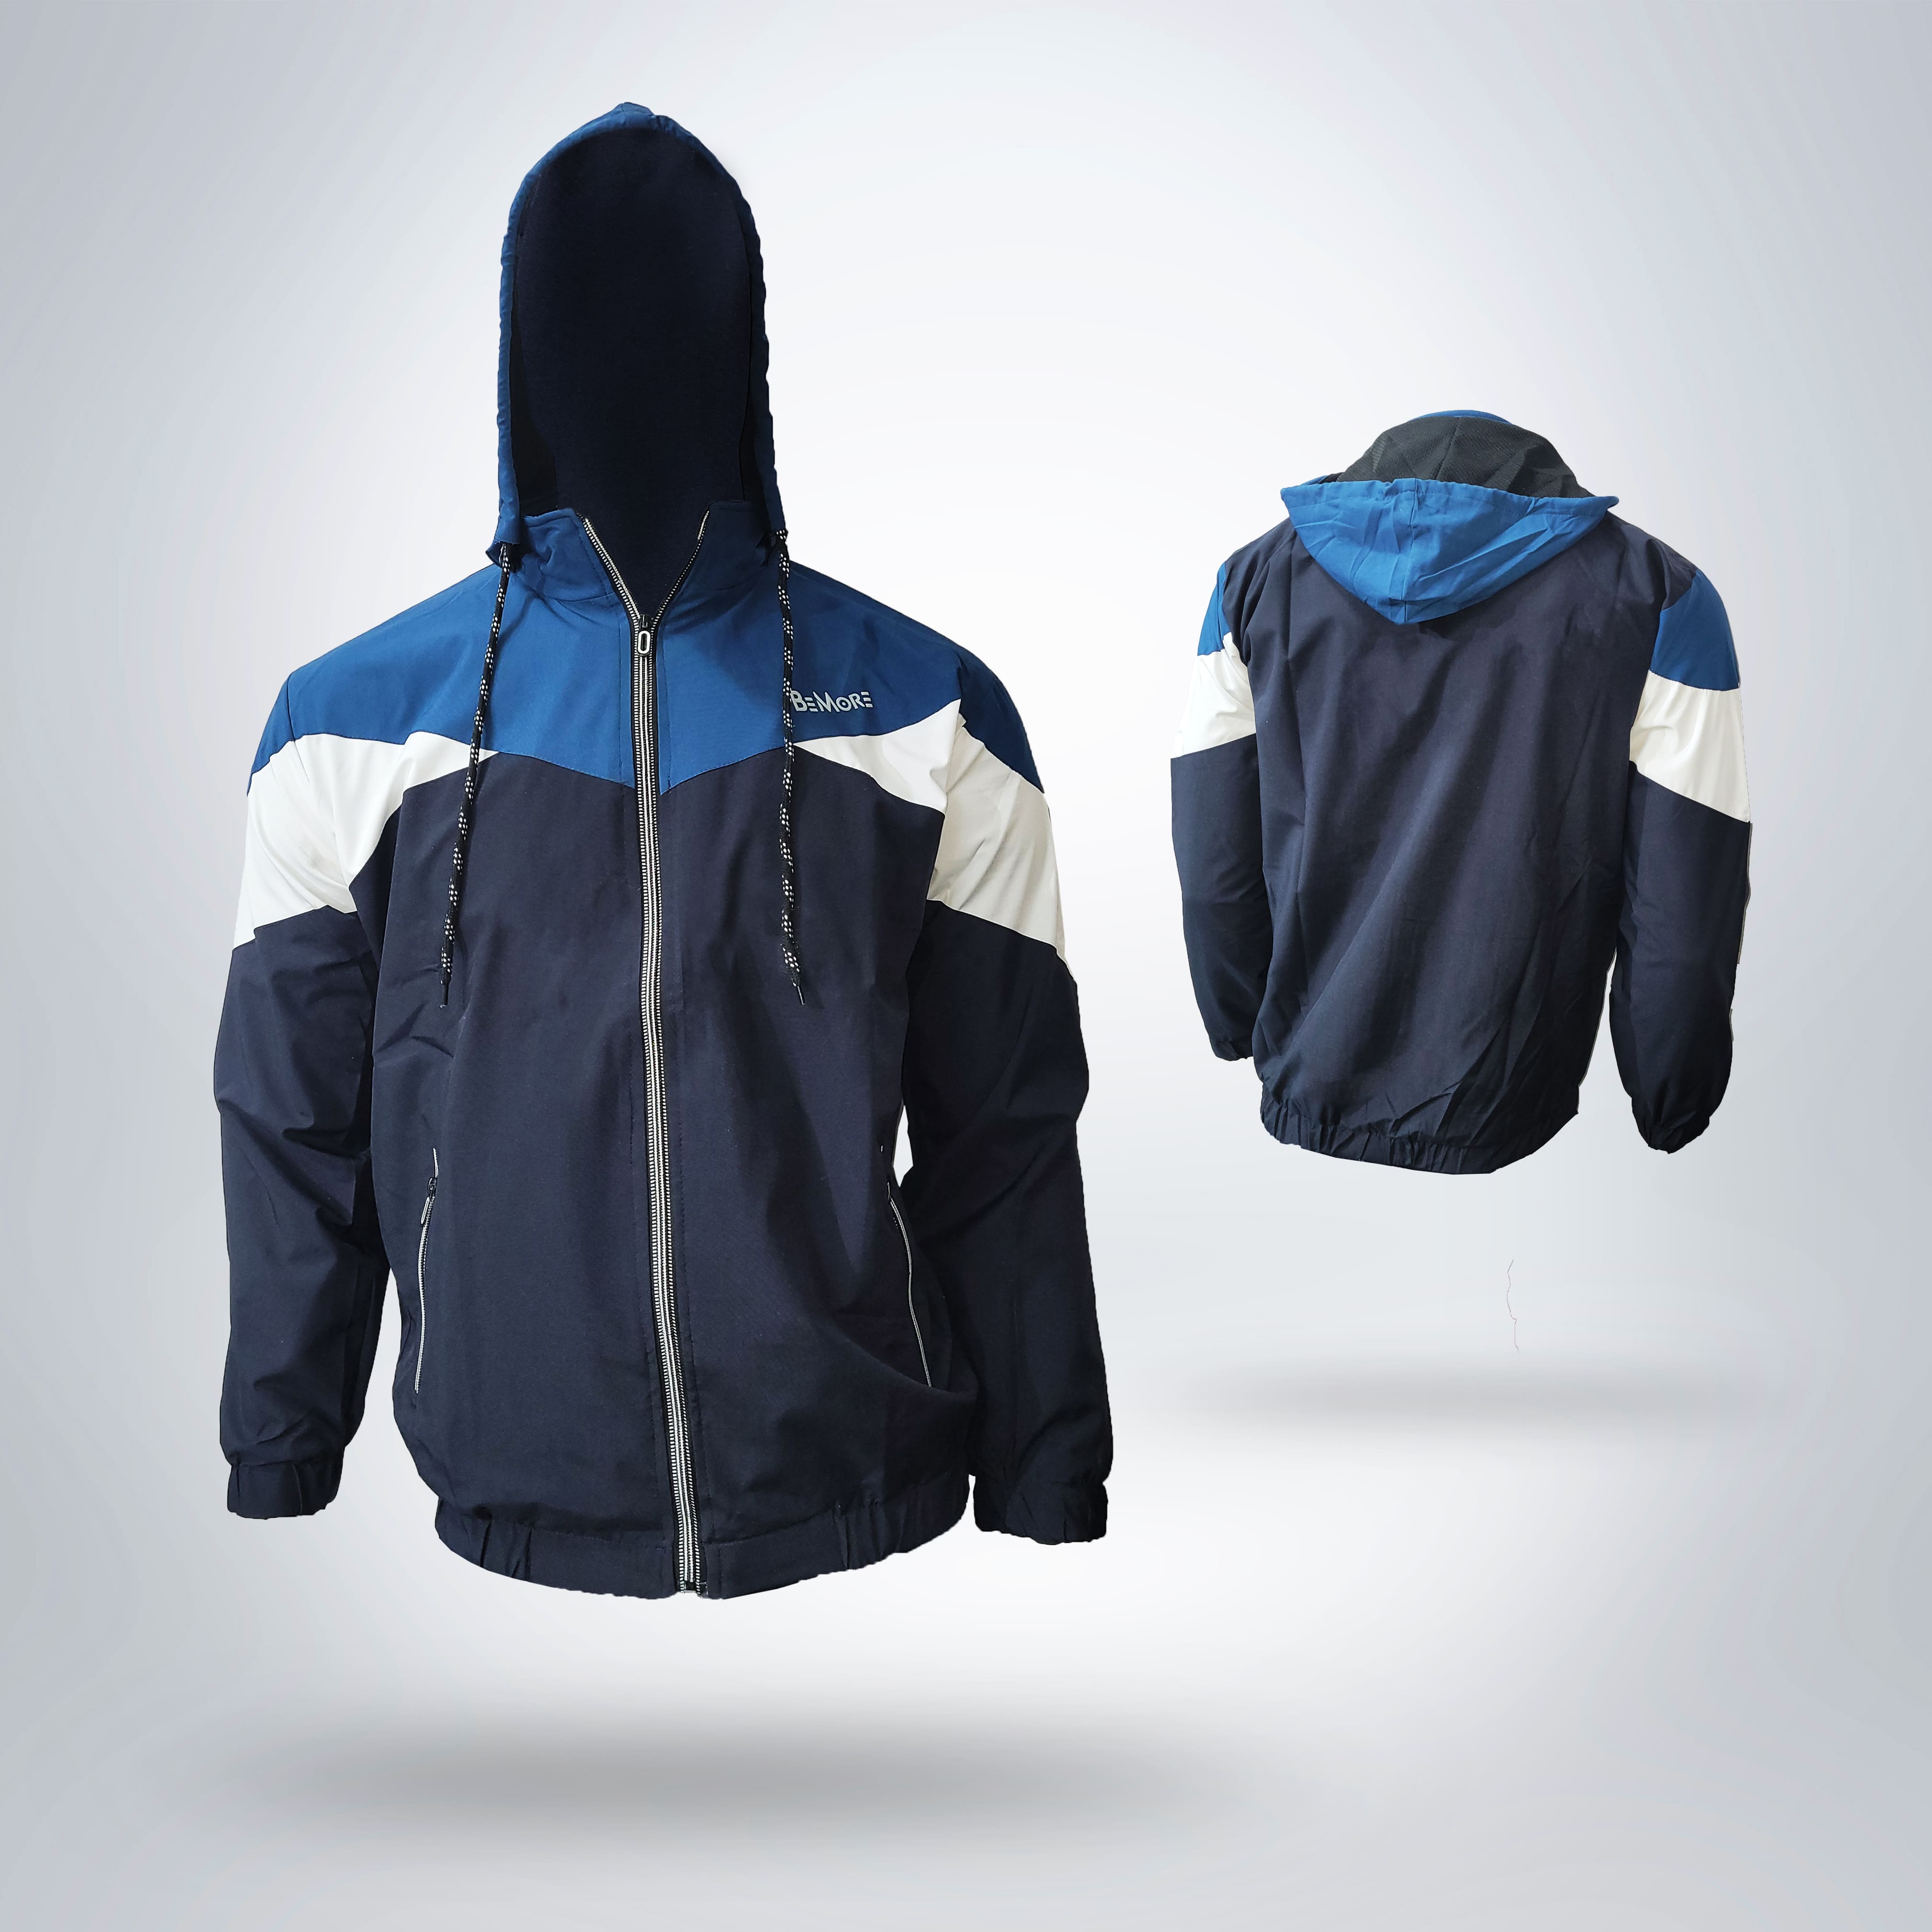 Premium Athletic Jacket for Men | Sports | Gym | Yoga | MZR25 Men's Jacket